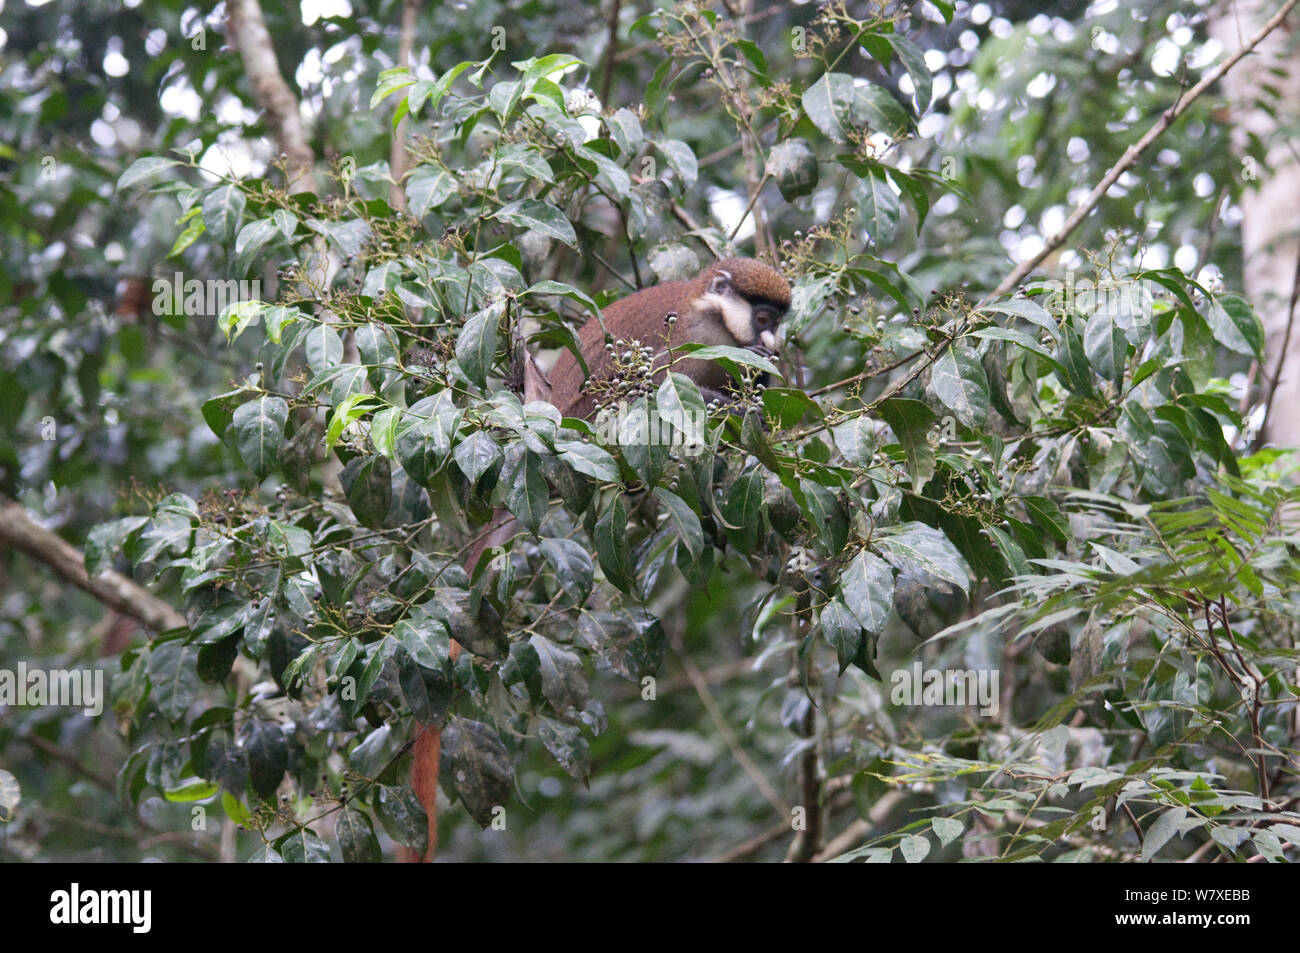 Red tailed guenon (Cercopithecus ascanius) Ernährung in fruchtkörper Baum, epulu Okapi Wildlife Reserve, UNESCO-Weltkulturerbe, Ituri Wald, der Demokratischen Republik Kongo. Stockfoto